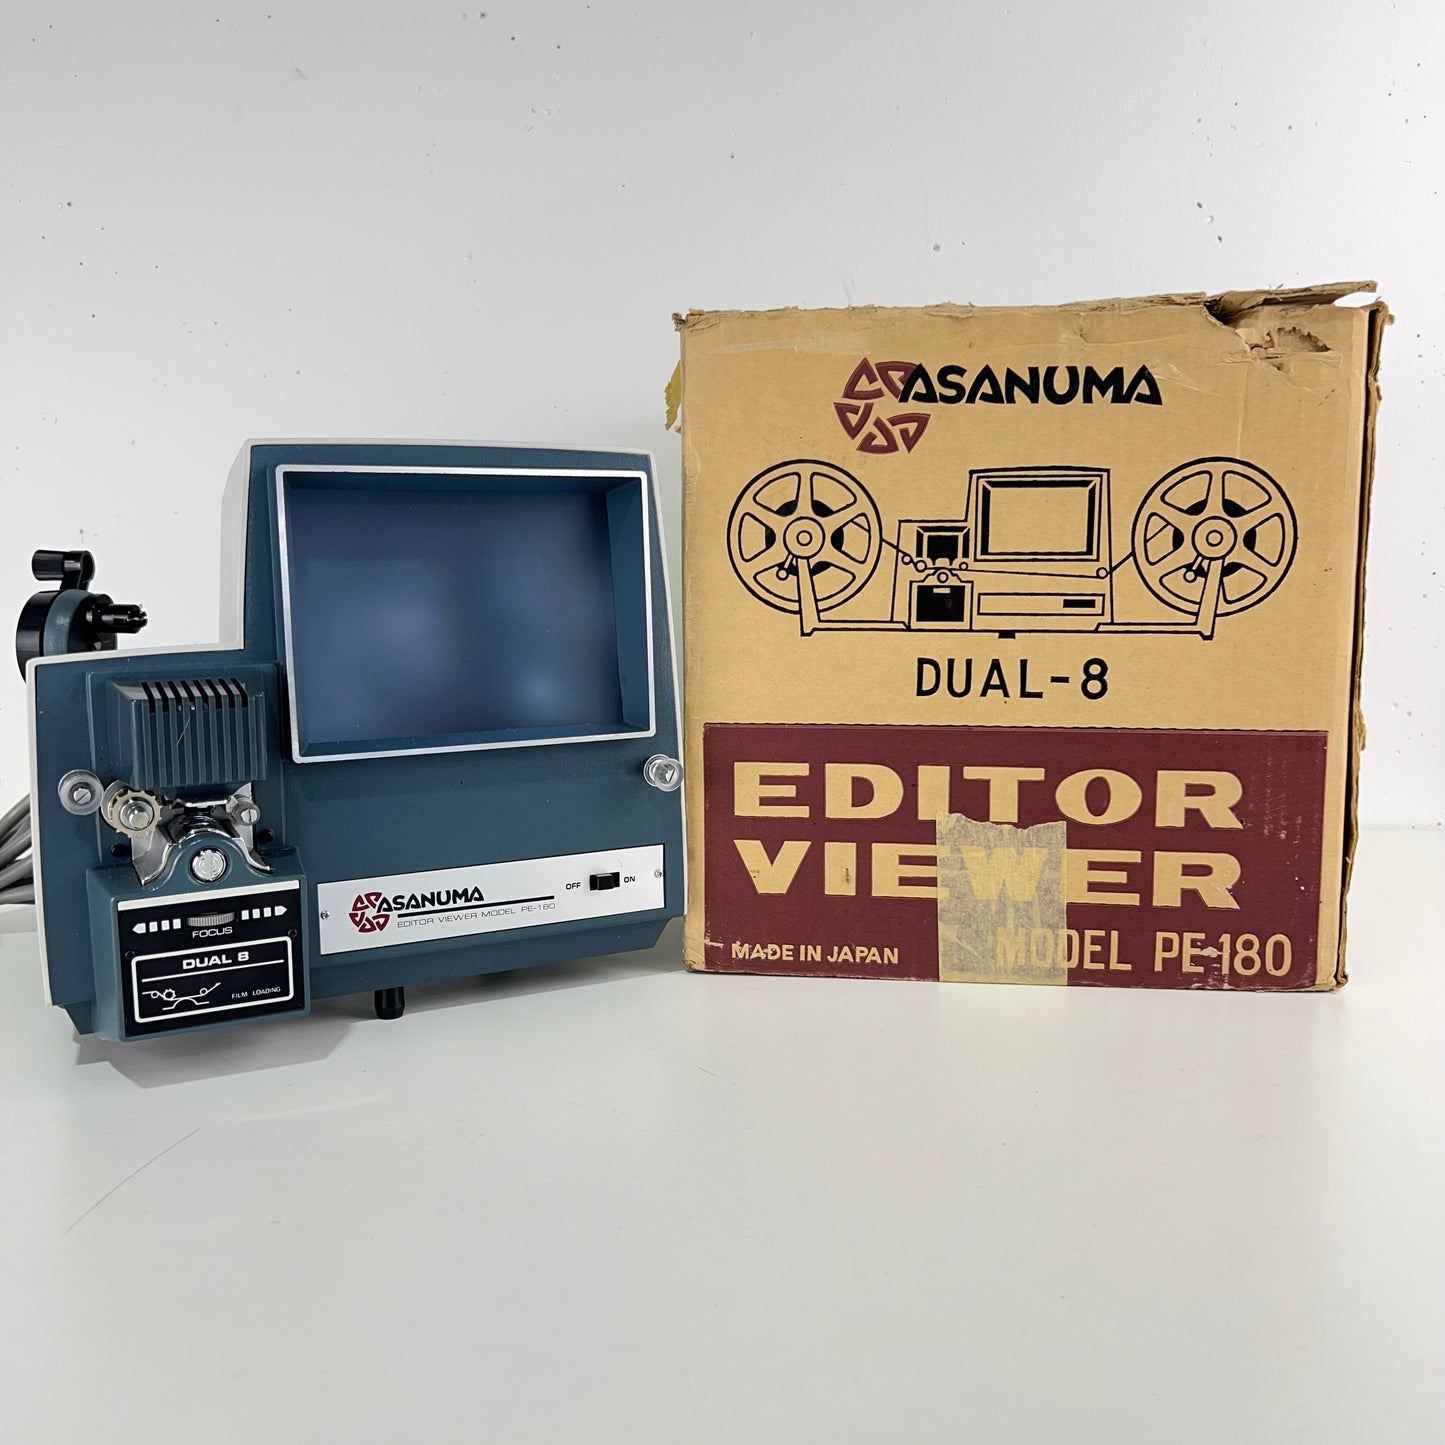 Asanuma 8mm Editor Viewer PE-180